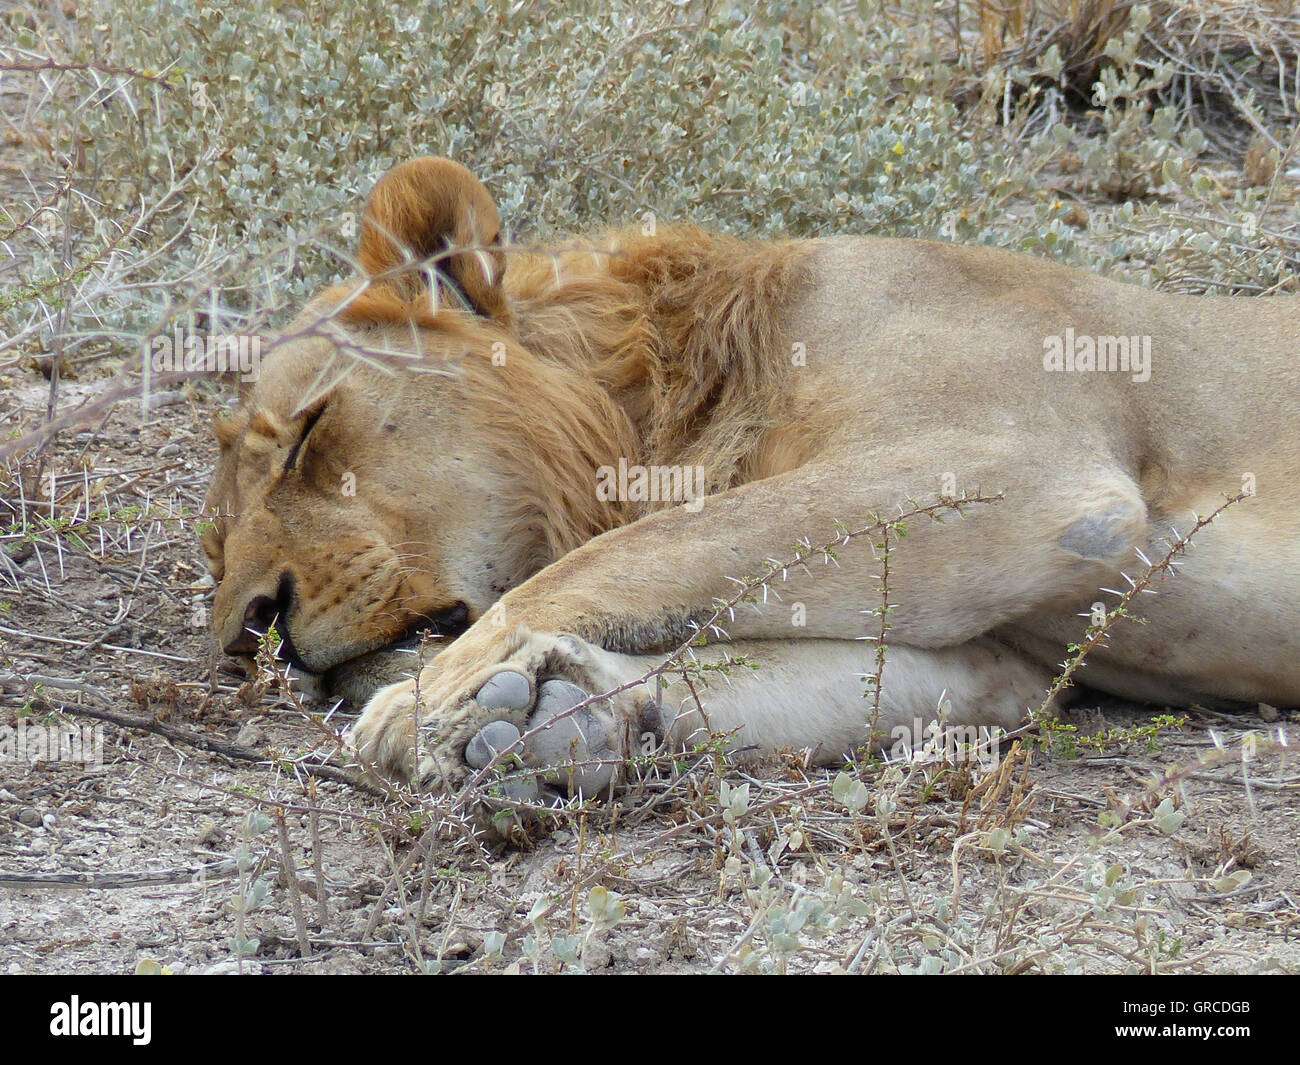 Sleeping Lion, Male Lion Stock Photo